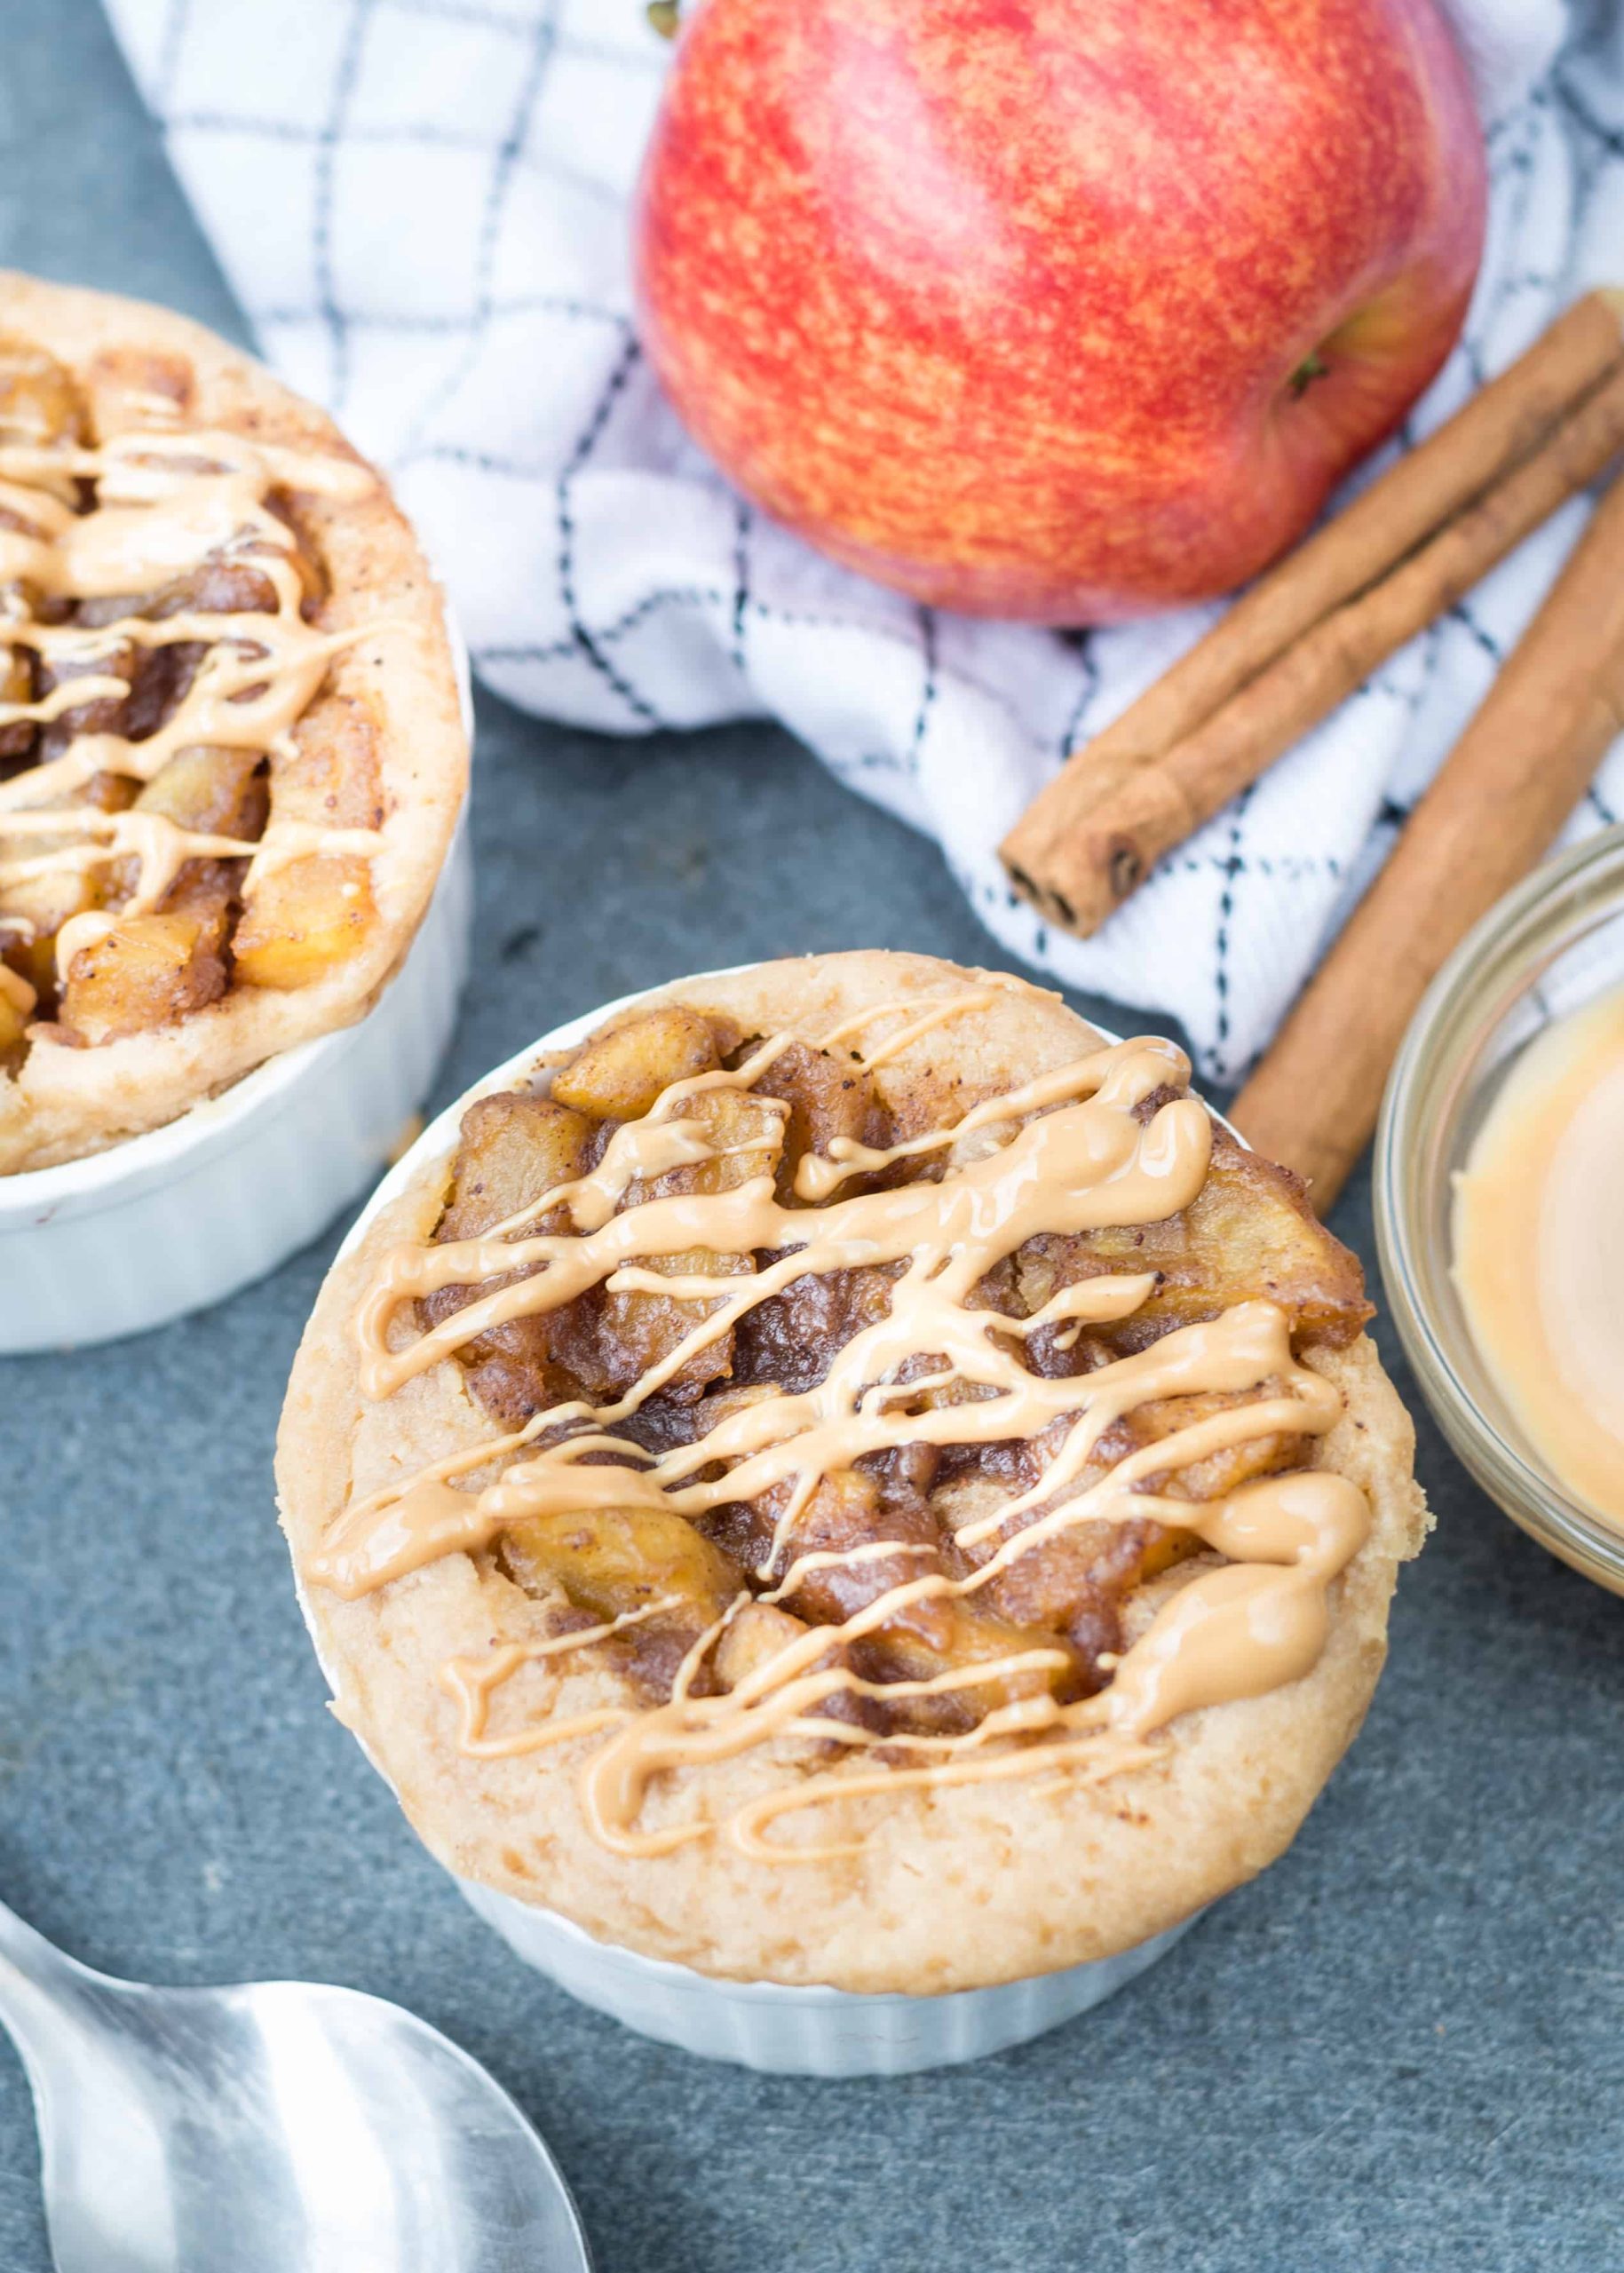 Microwave Apple Cinnamon Muffin (Easy Dorm Food!) - Dorm Room Cook